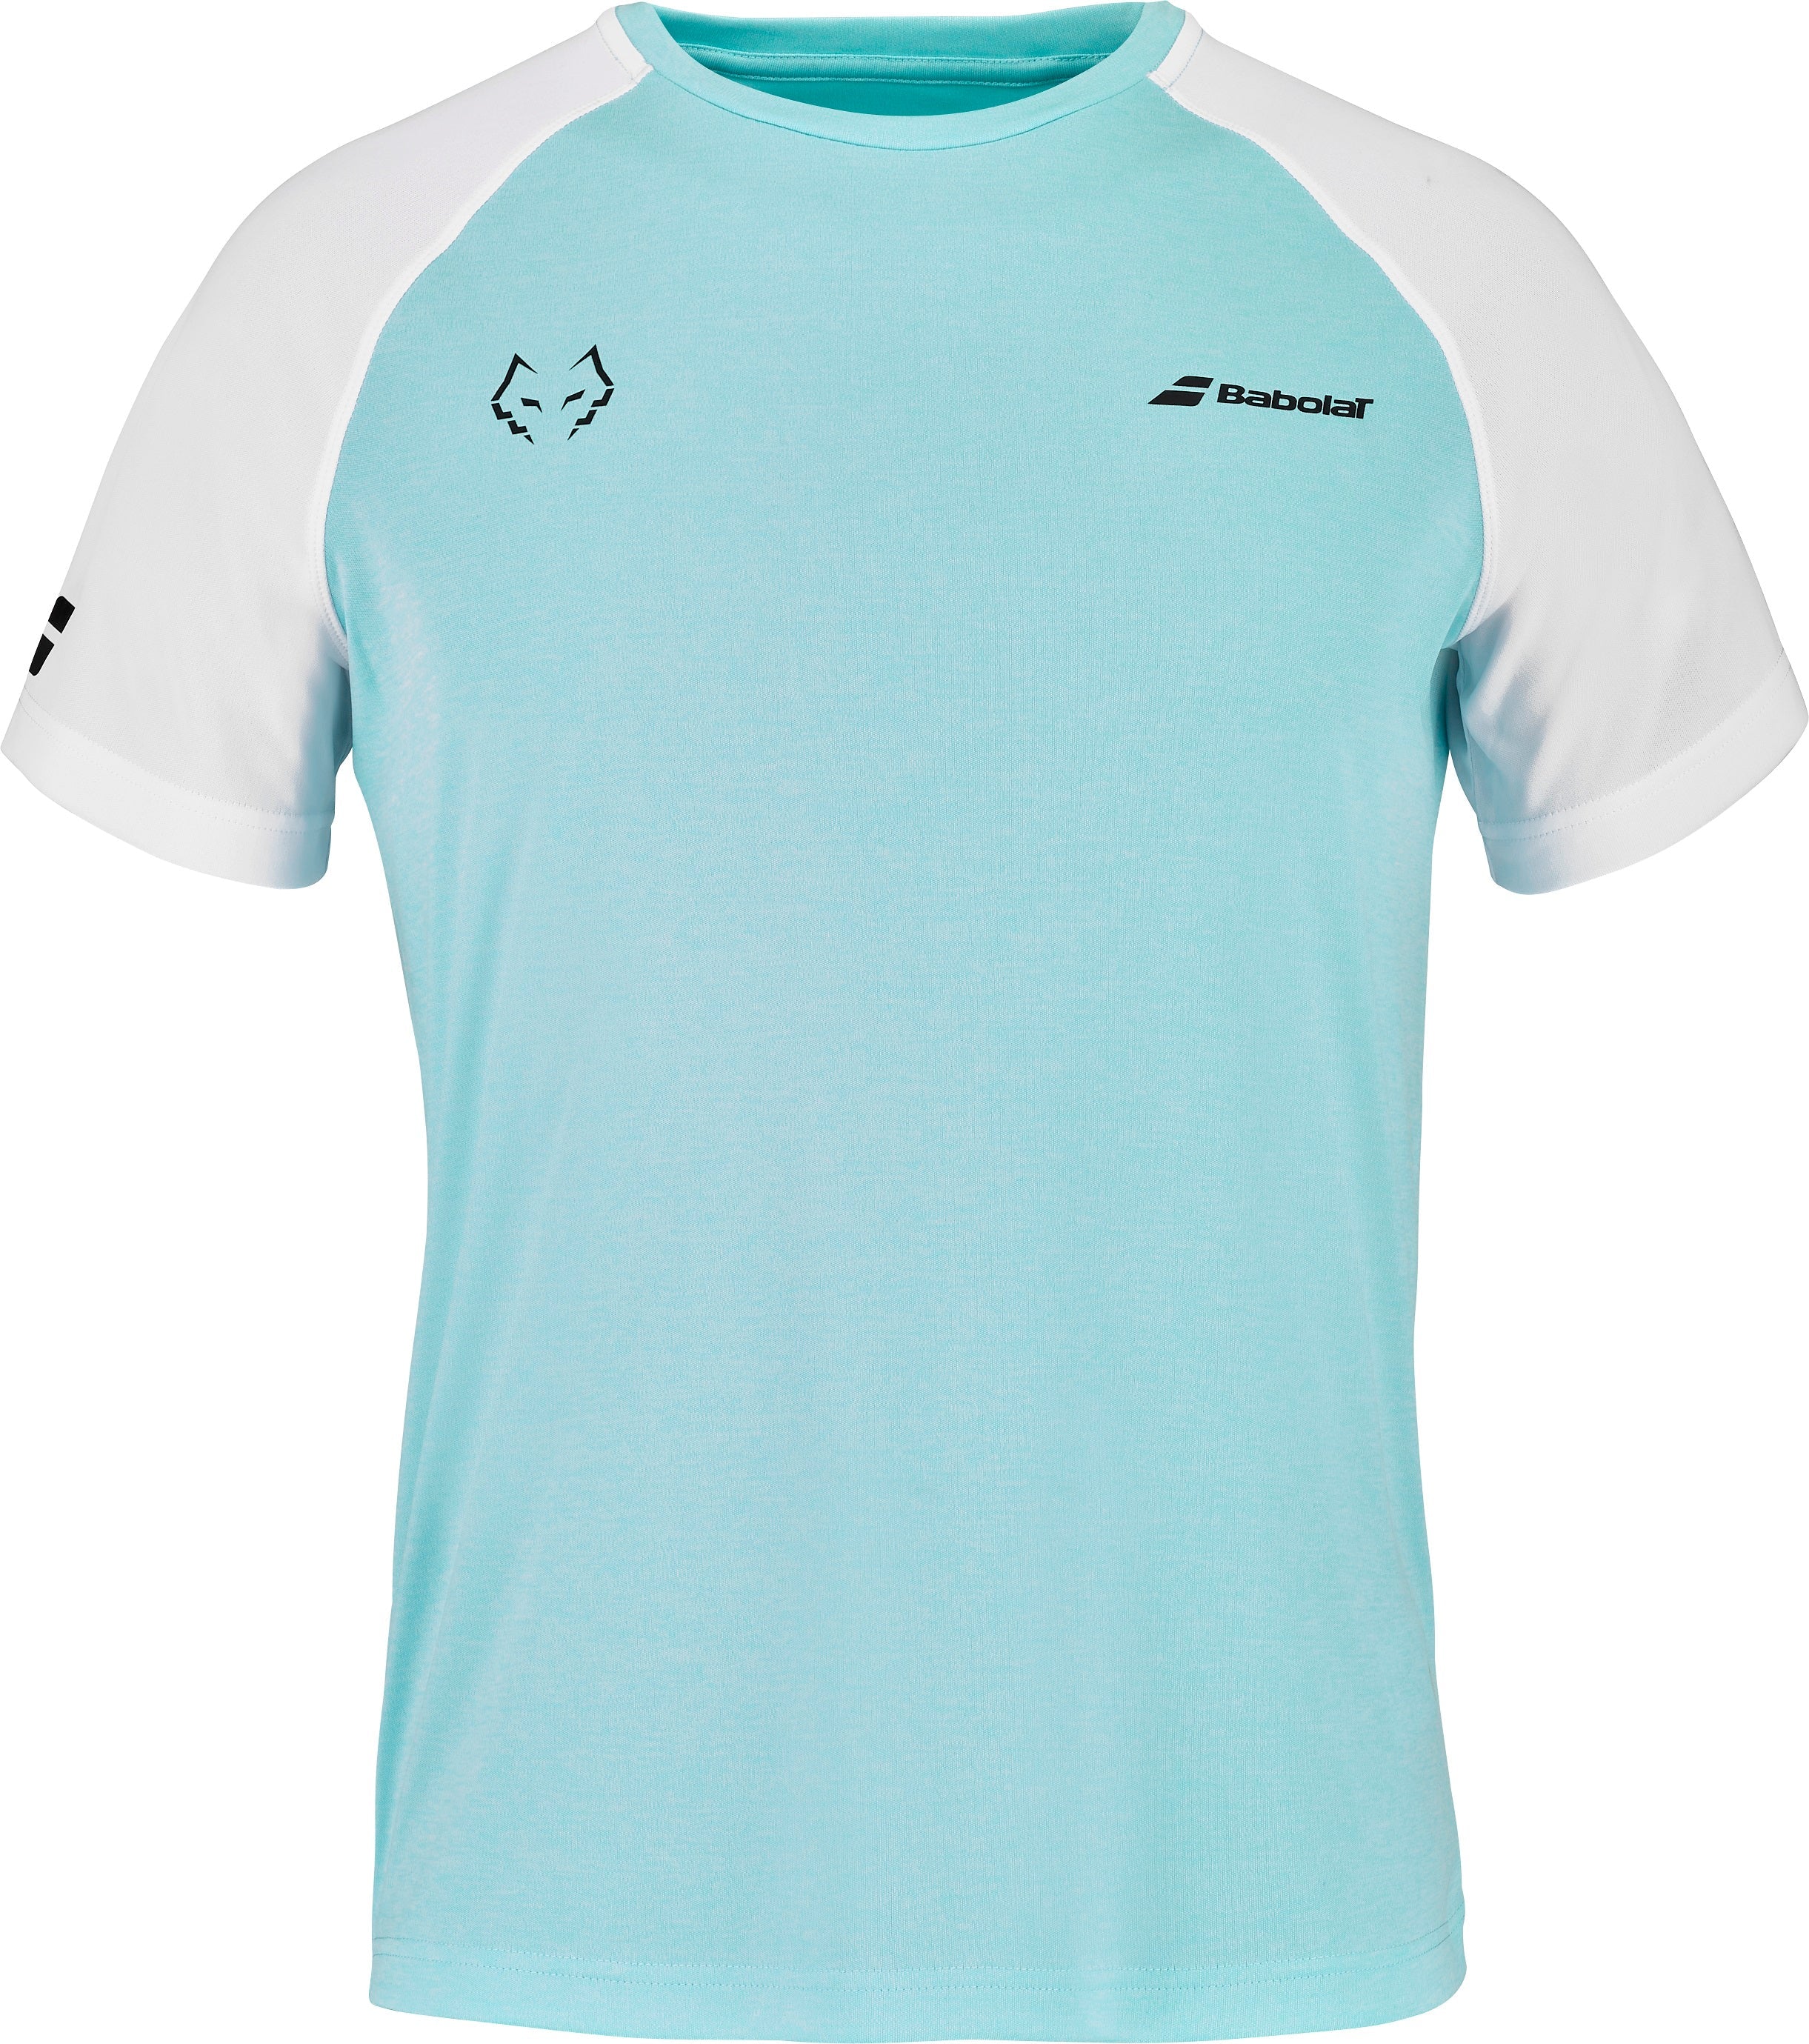 Babolat Crew Neck T-shirt Juan Lebron (Engelenblauw/Wit)